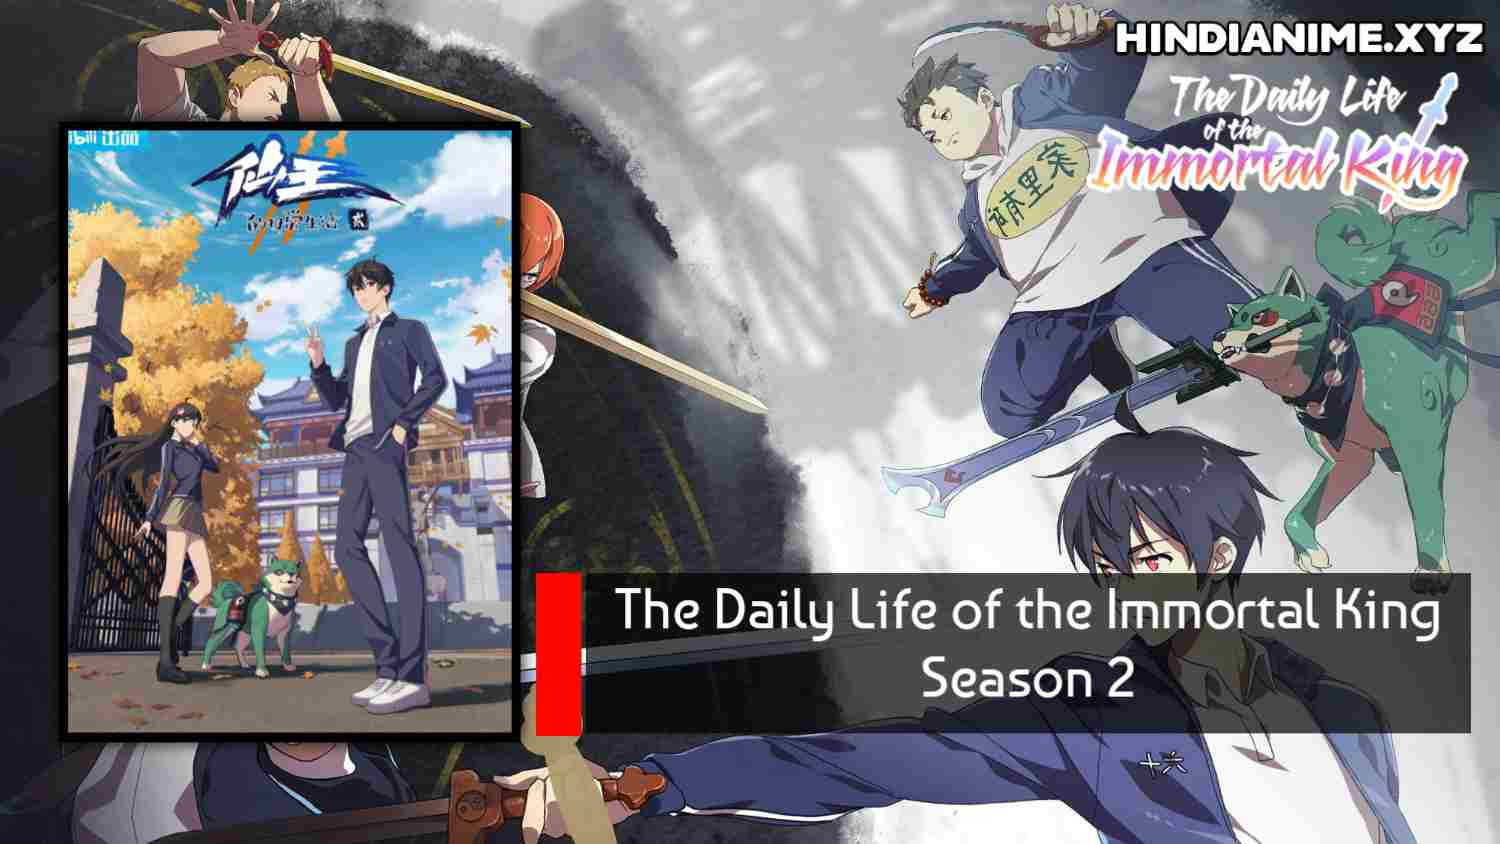 The Daily Life of the Immortal King Season 2